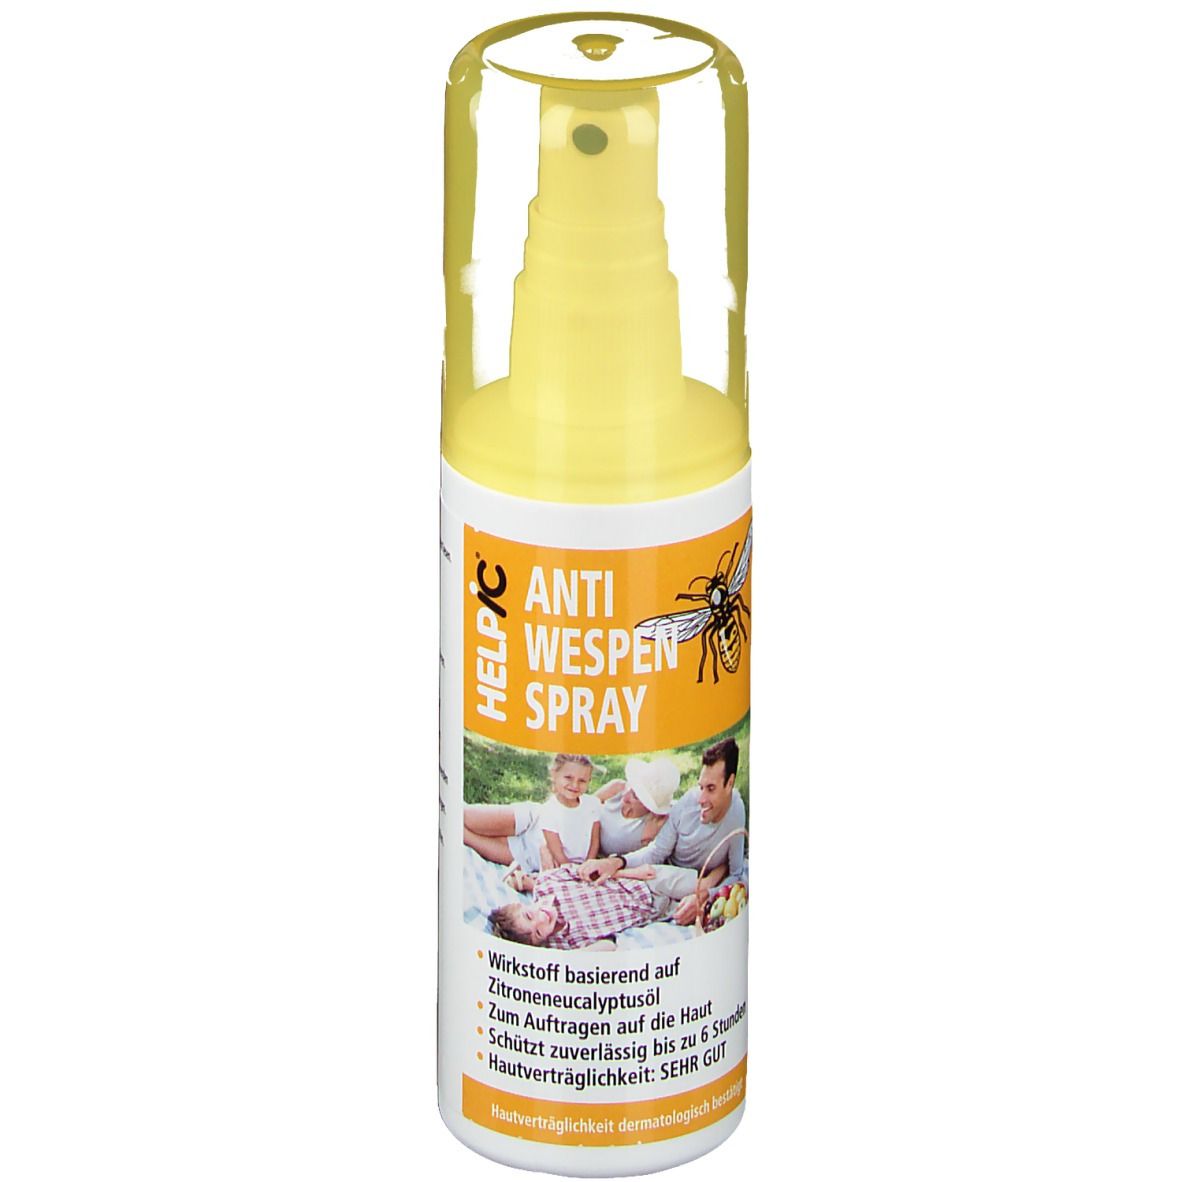 HELPIC® Anti Wespen Spray